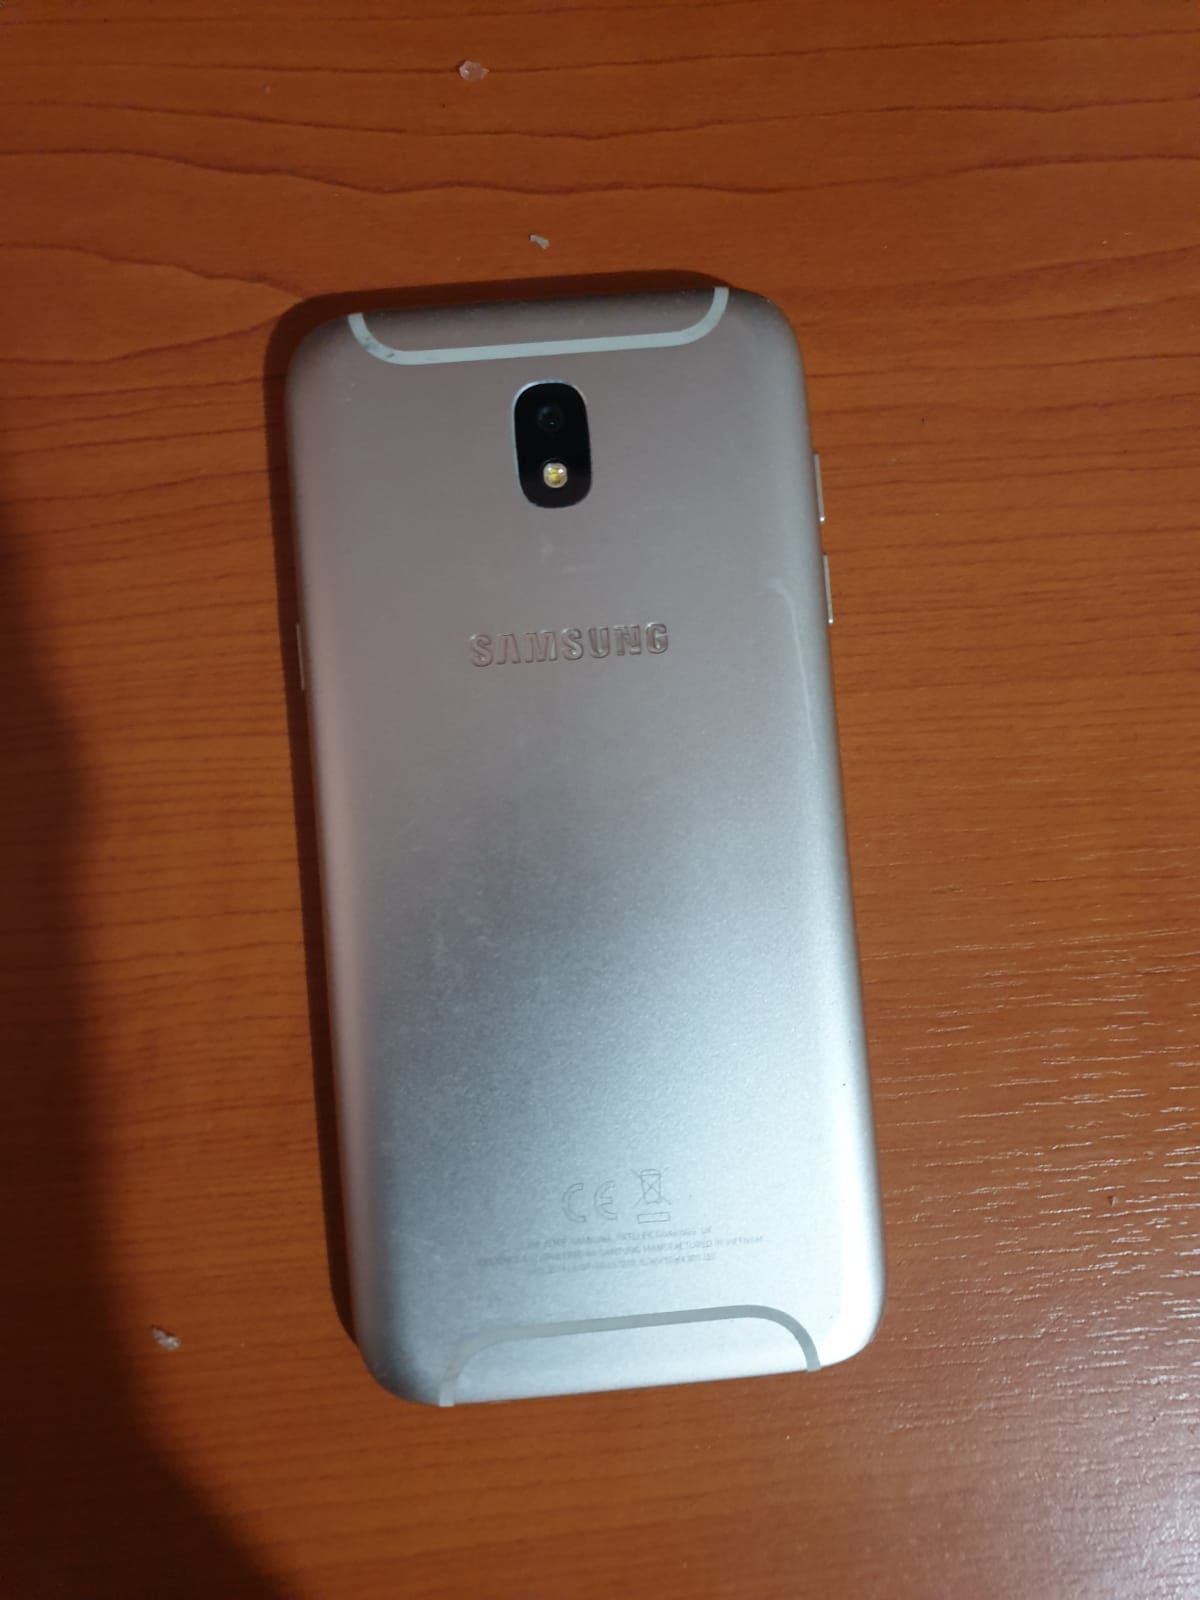 Samsung galaxy j7 pro,dual sim,64gb,gold